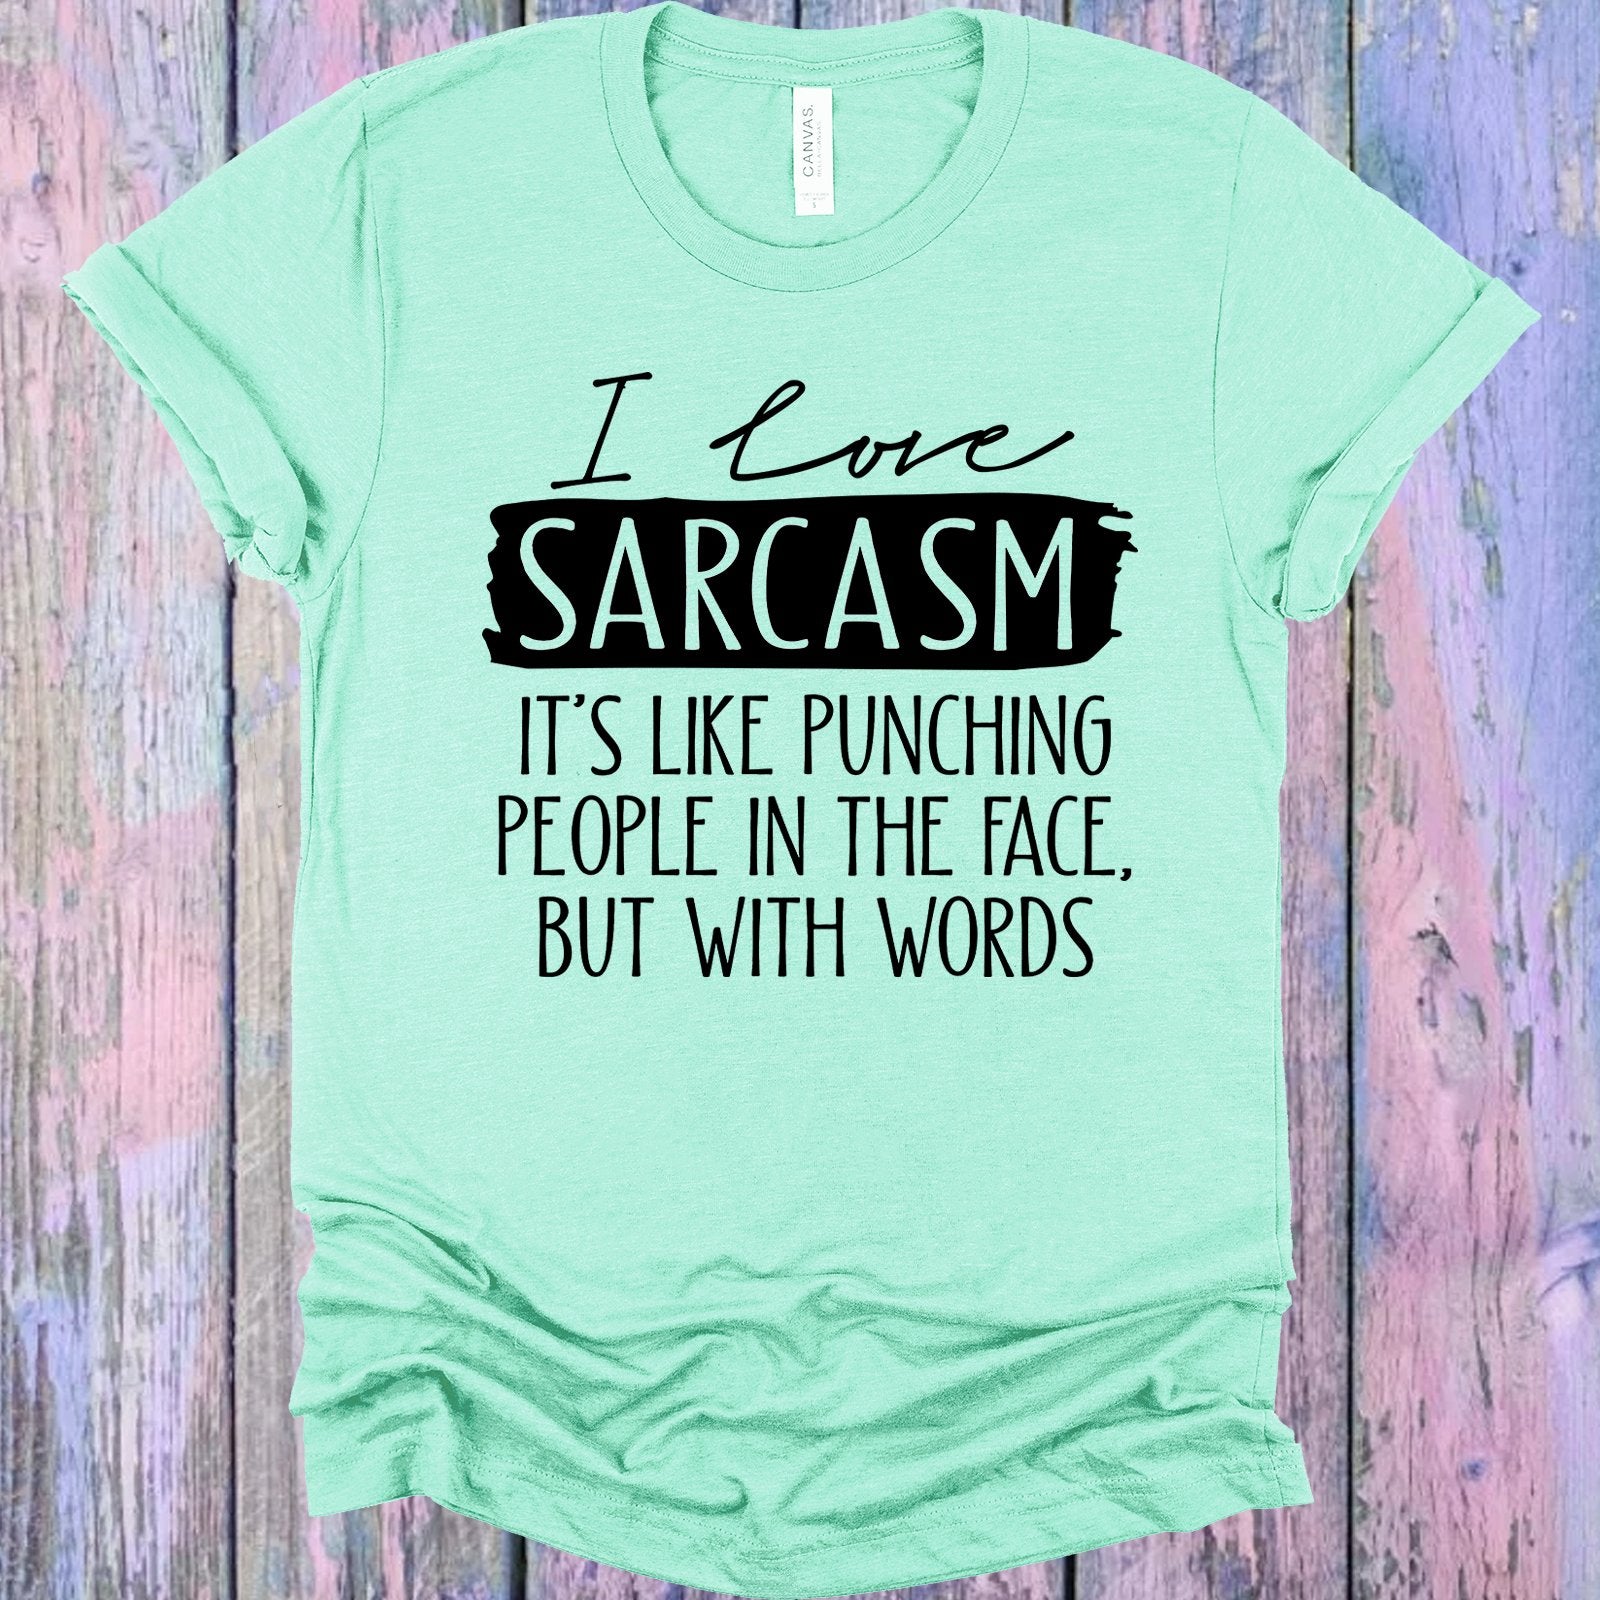 I Love Sarcasm Graphic Tee Graphic Tee